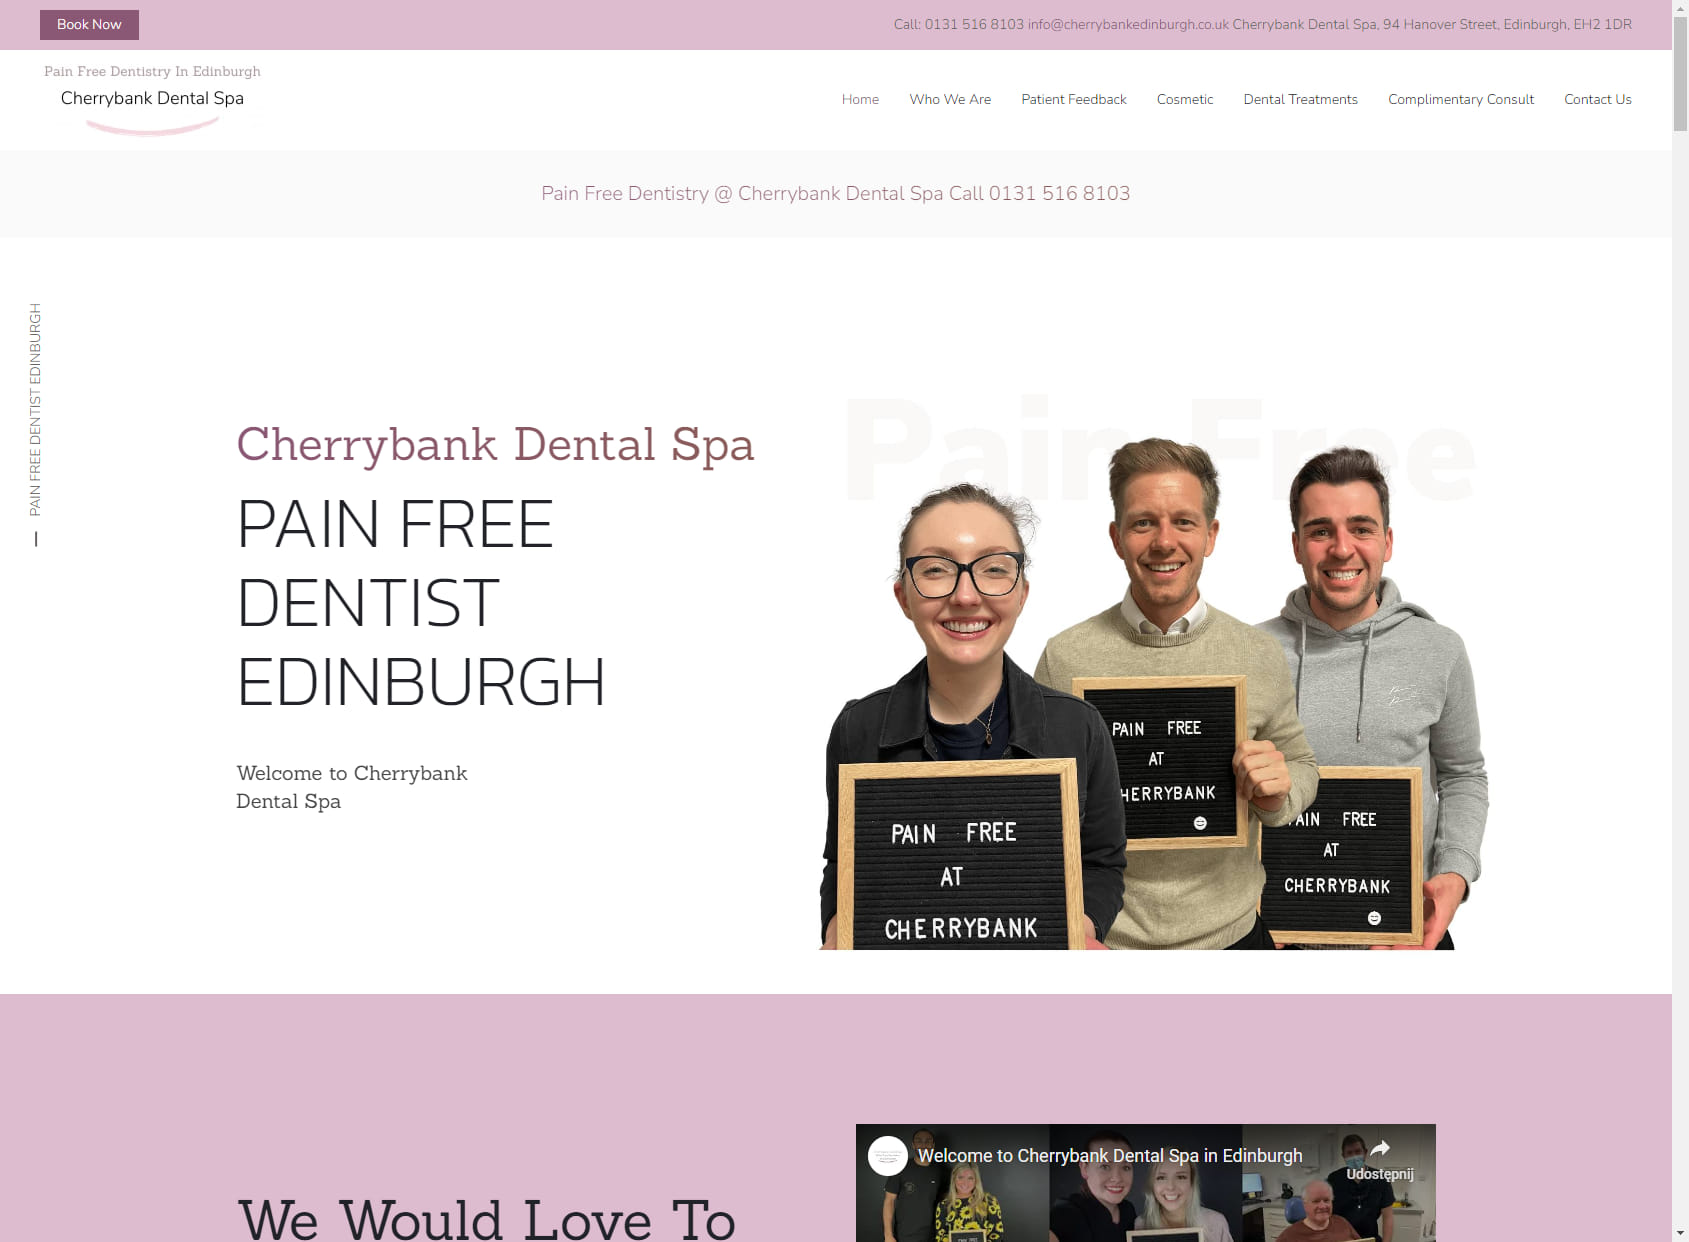 Cherrybank Dental Spa